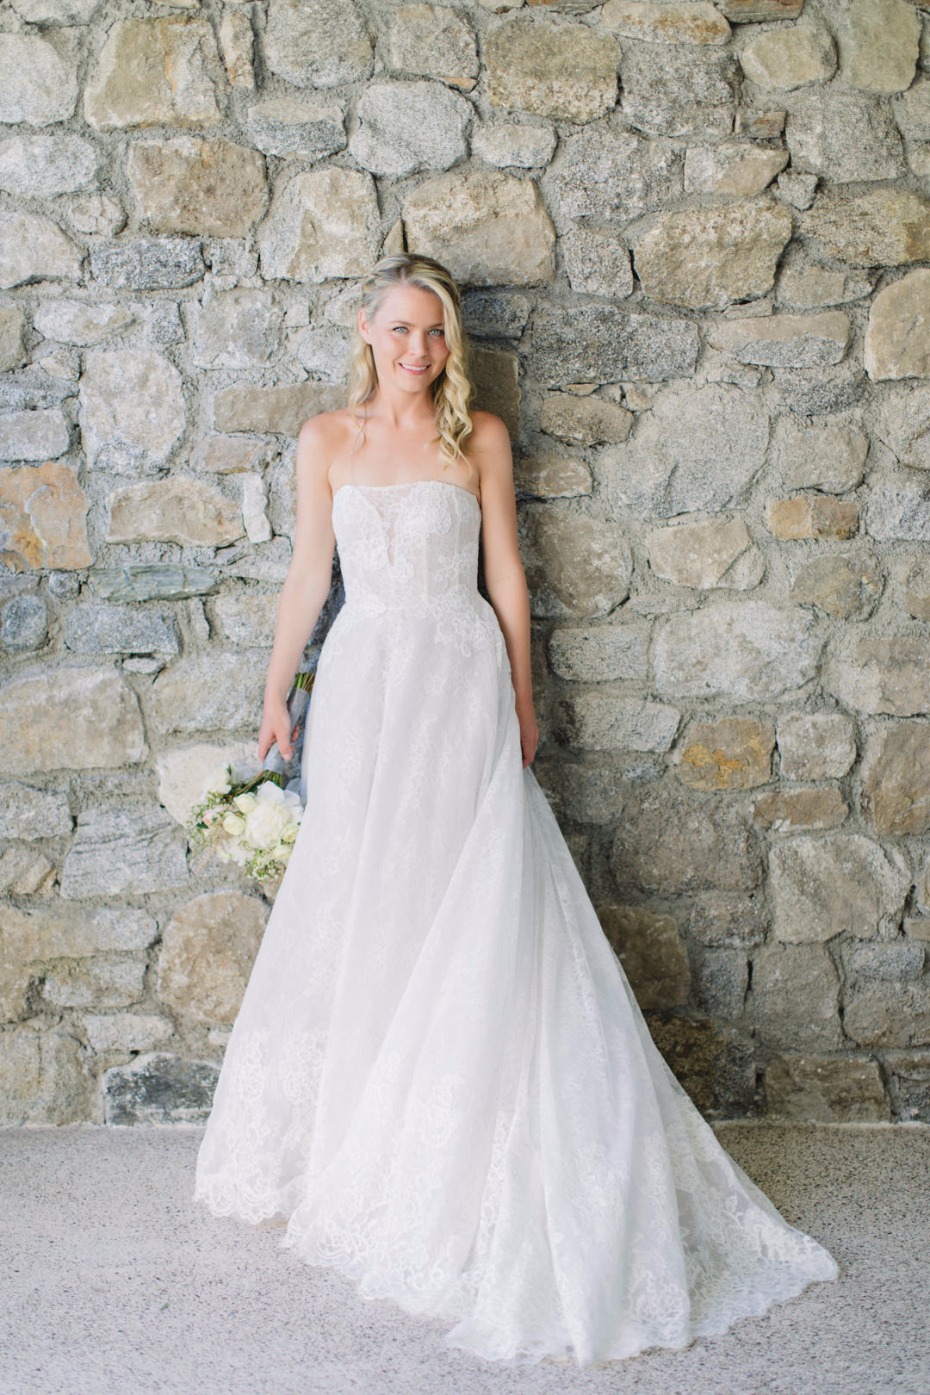 How to Have a Luxury Destination Wedding in Mykonos